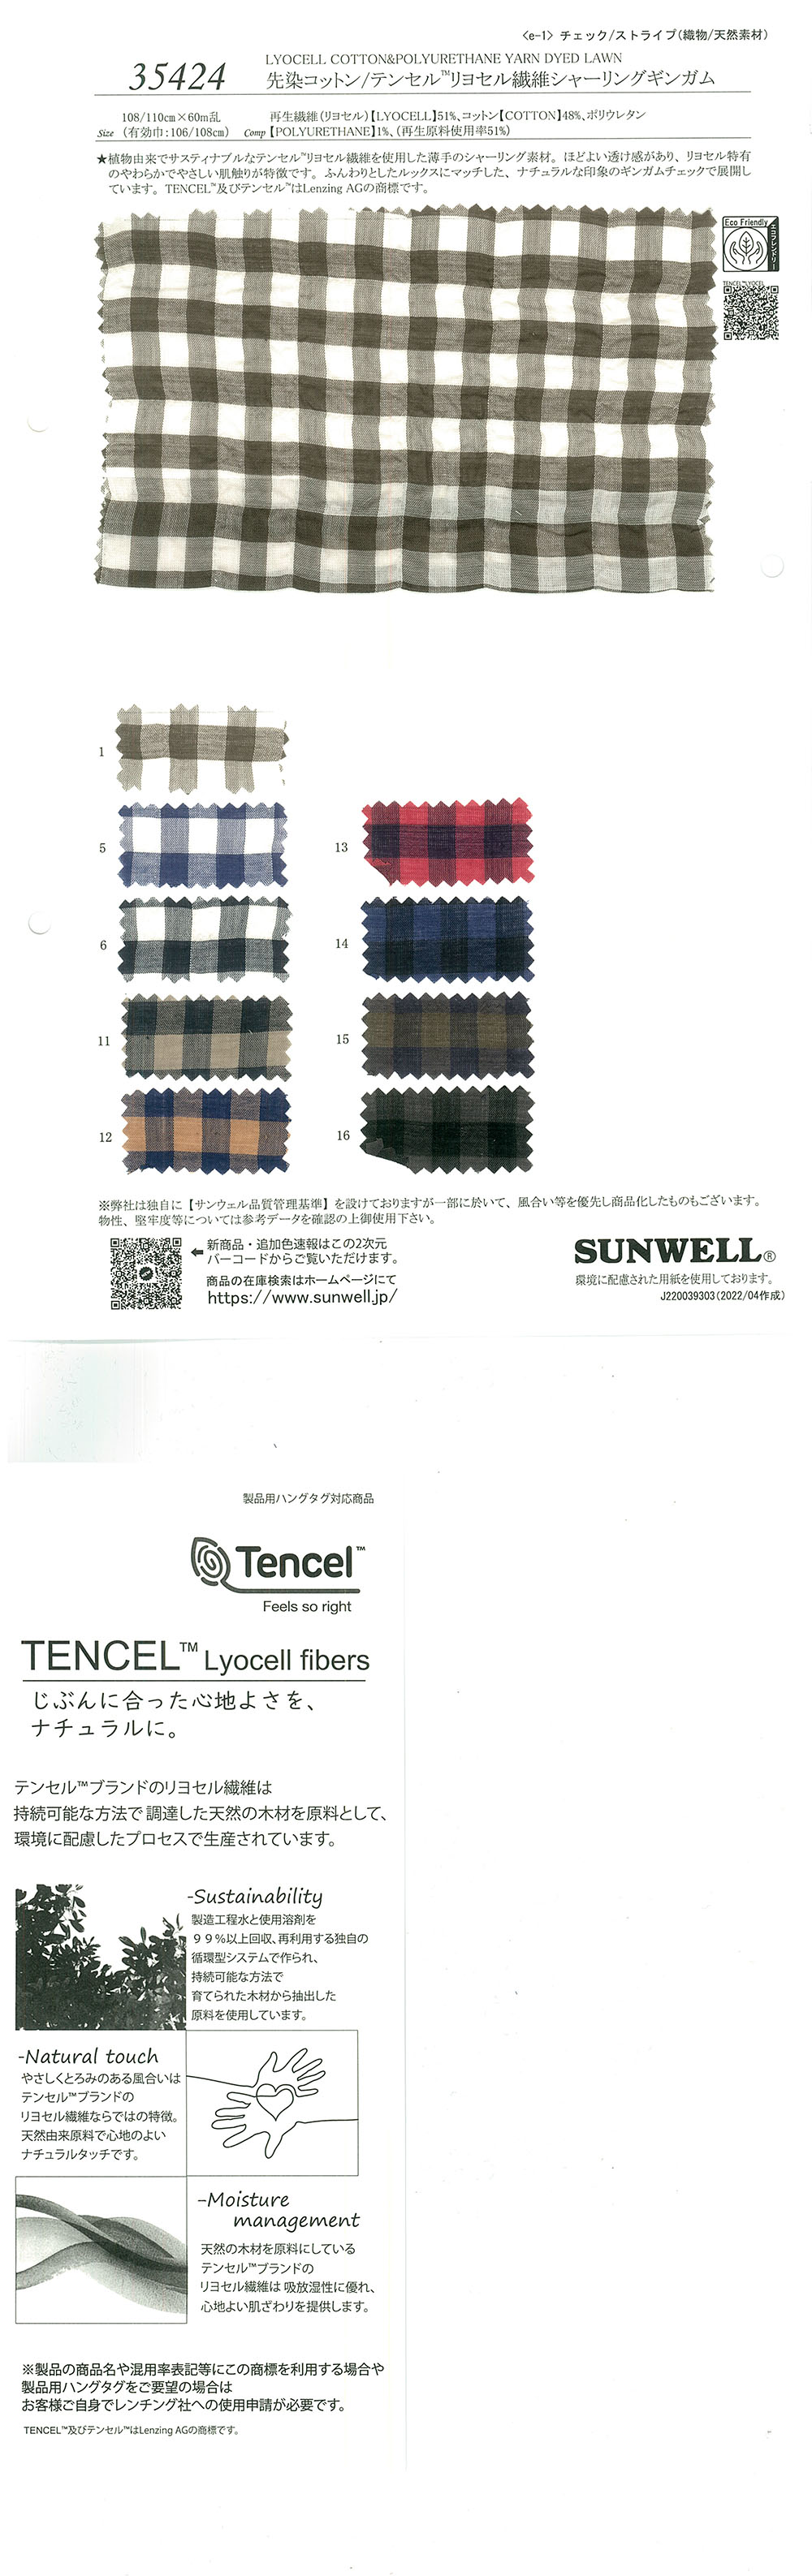 35424 Garngefärbte Baumwolle/Tencel (TM) Lyocell-Faser-Kräuseln Gingham[Textilgewebe] SUNWELL